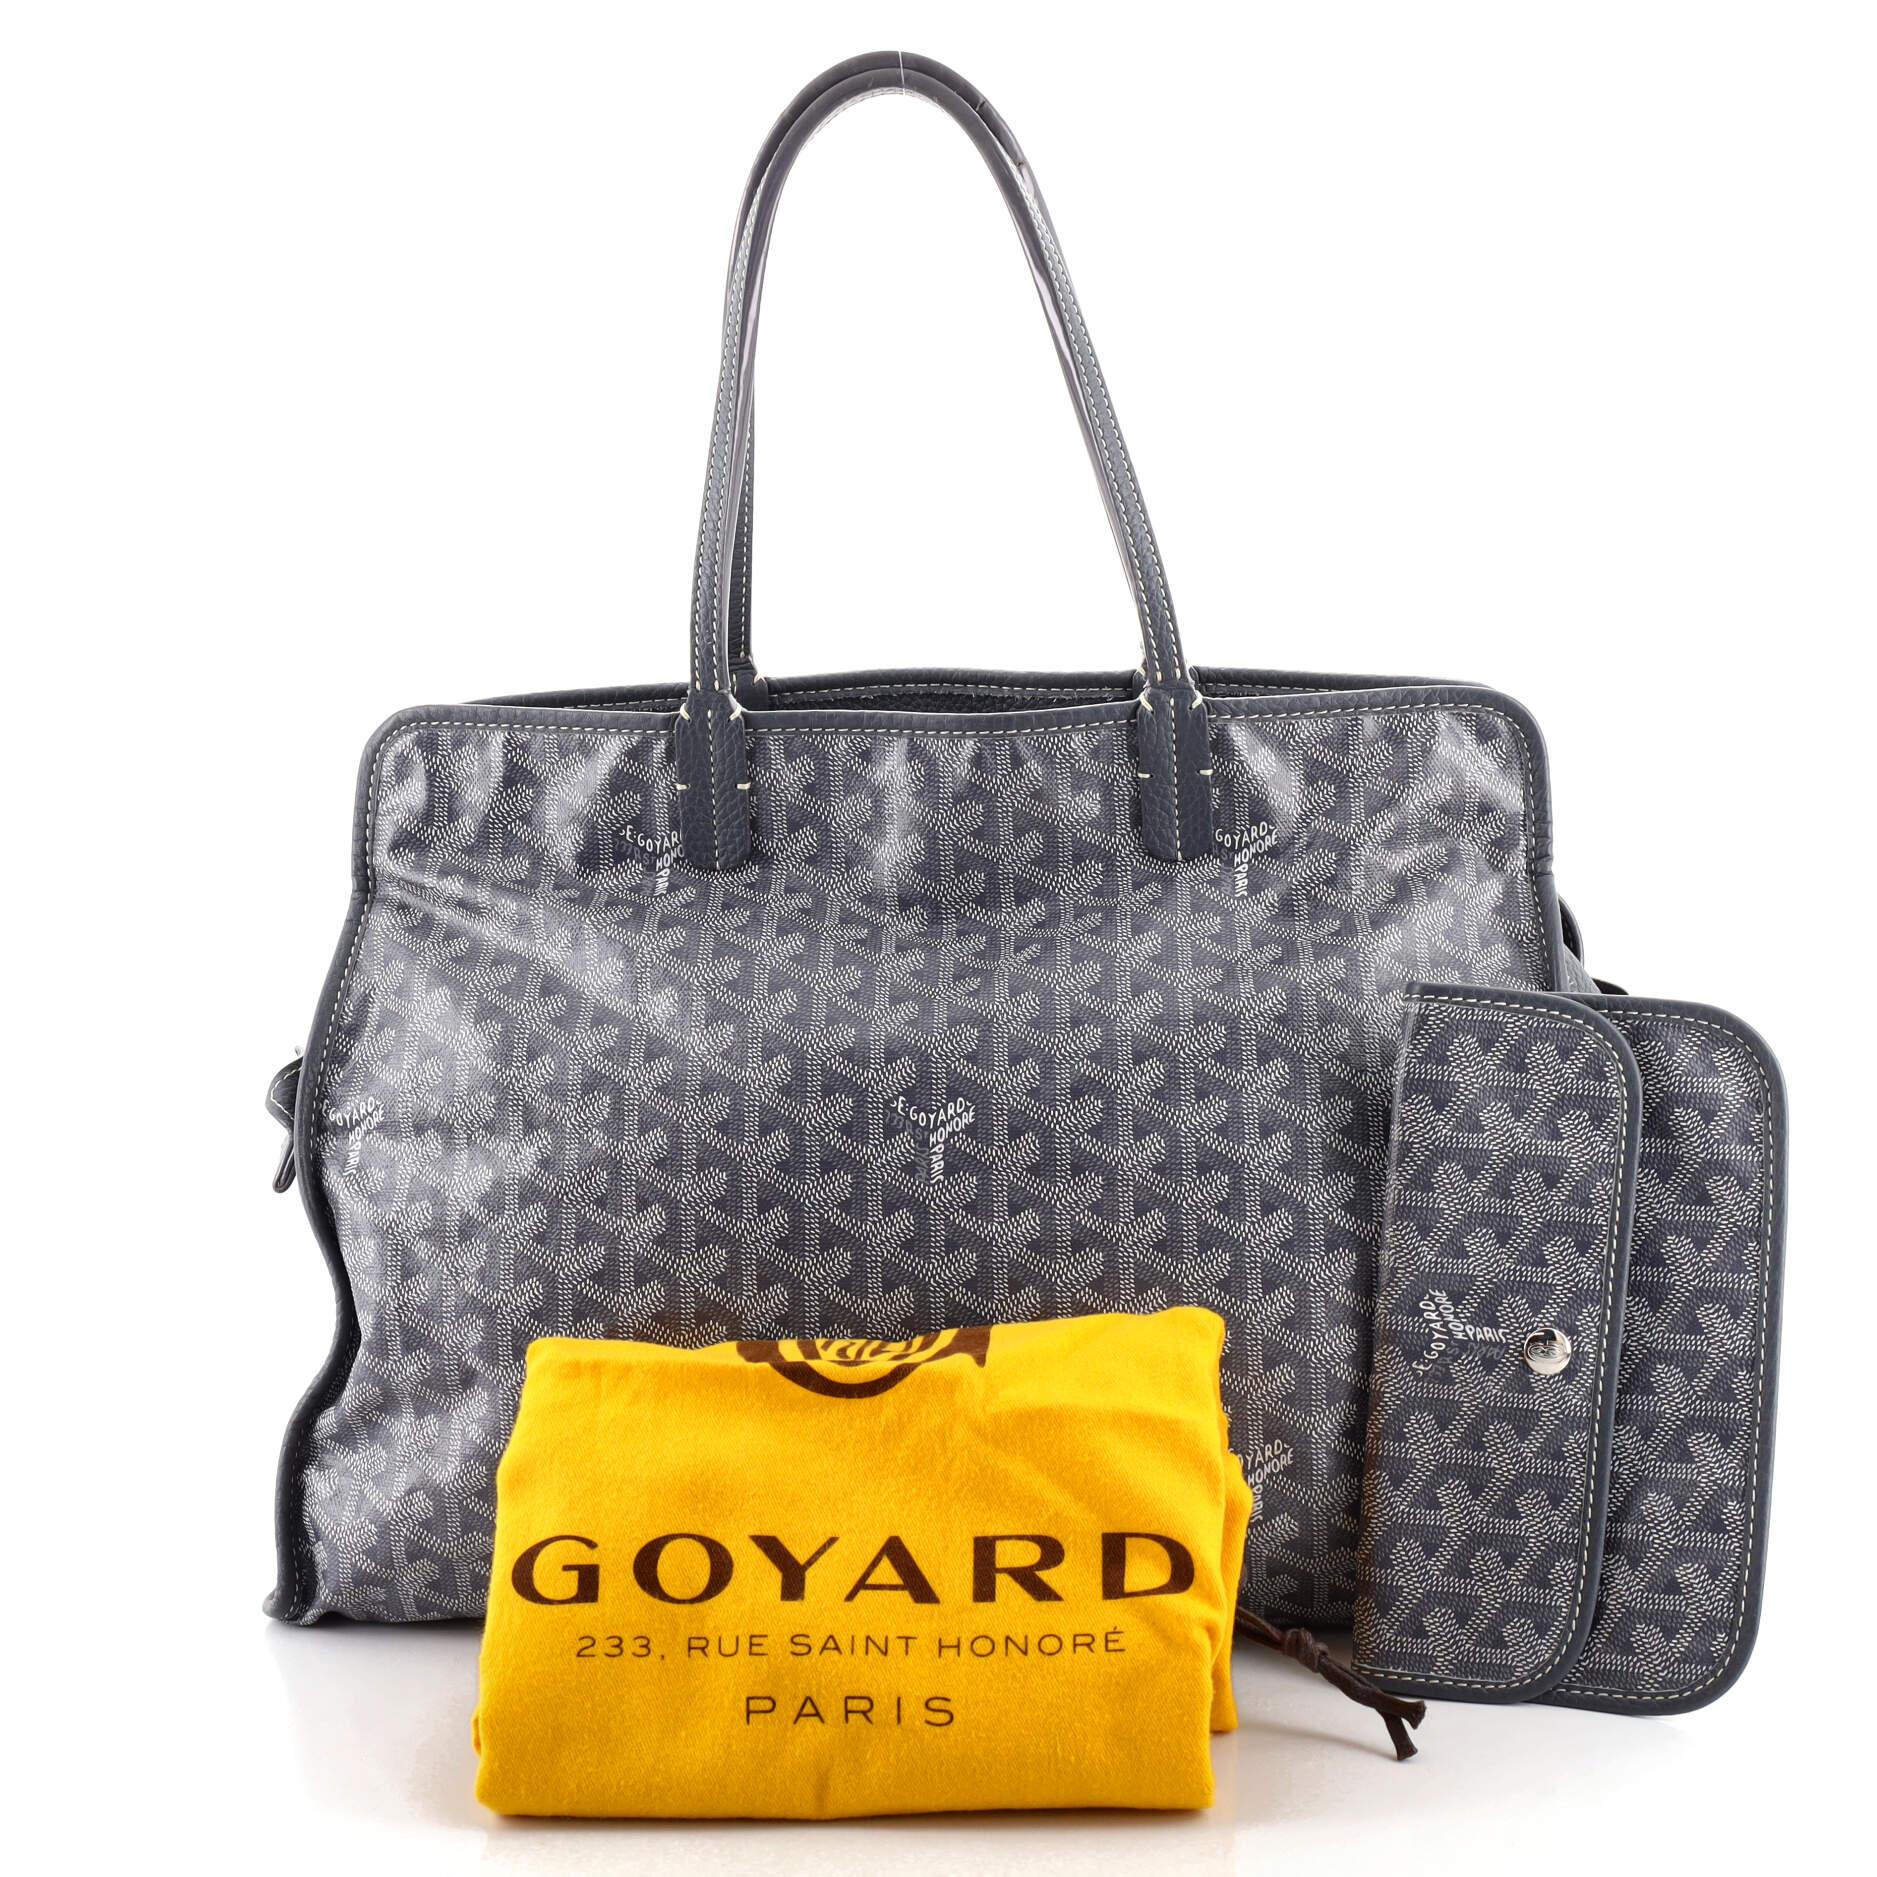 Goyard Hardy Bag - For Sale on 1stDibs